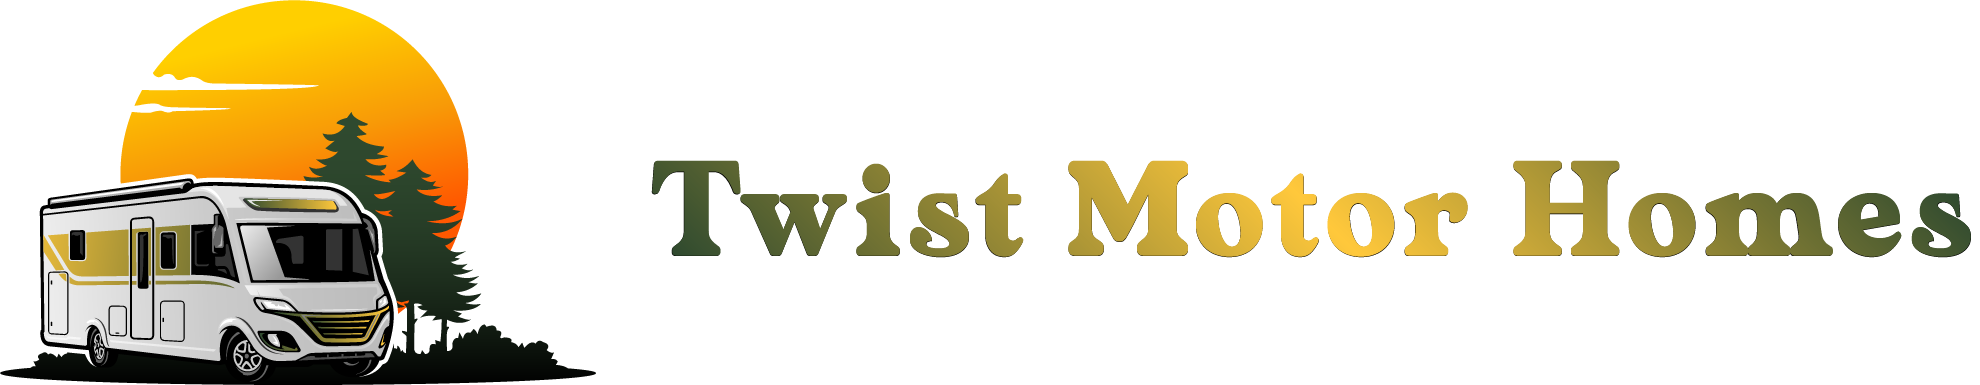 Twist Motor Homes logo